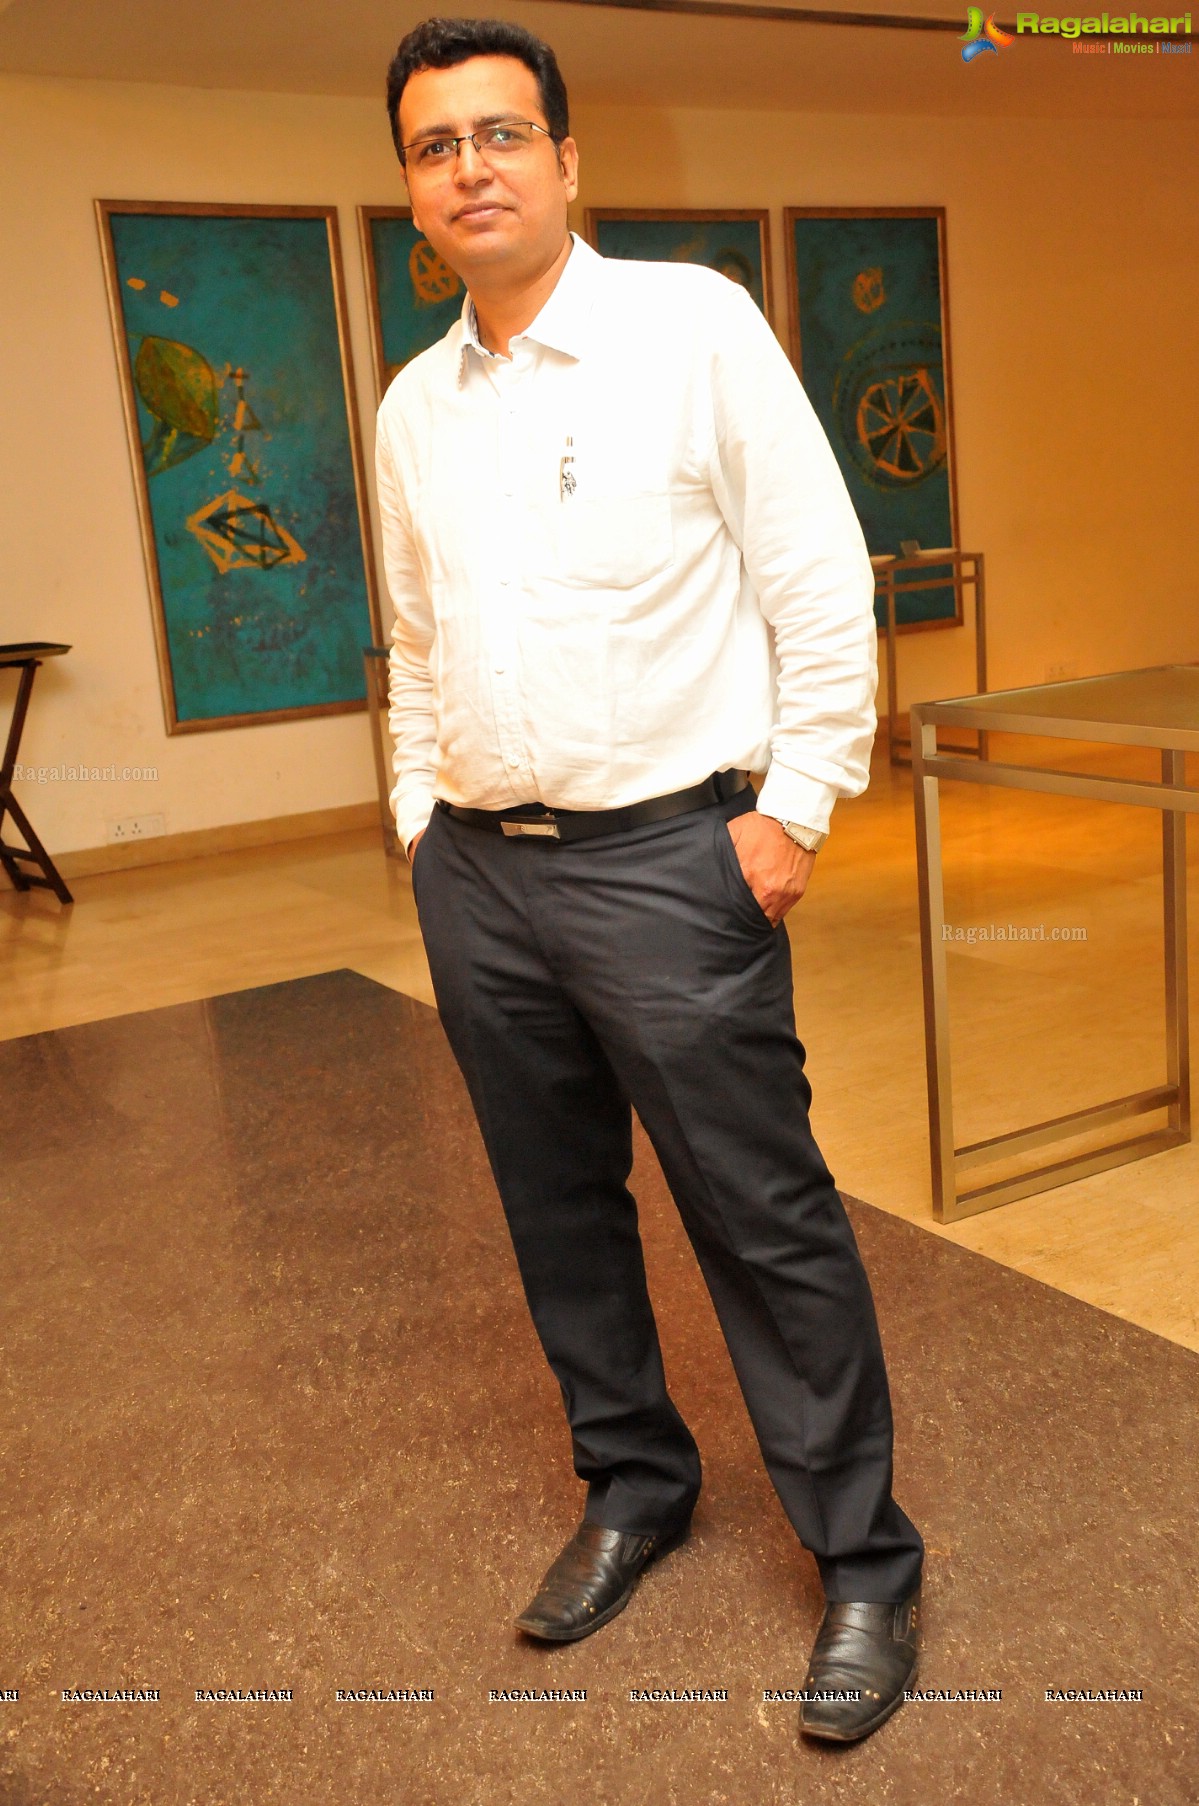 BNI Icon Meet at Radisson Blu Plaza, Hyderabad (Sep. 23, 2014)